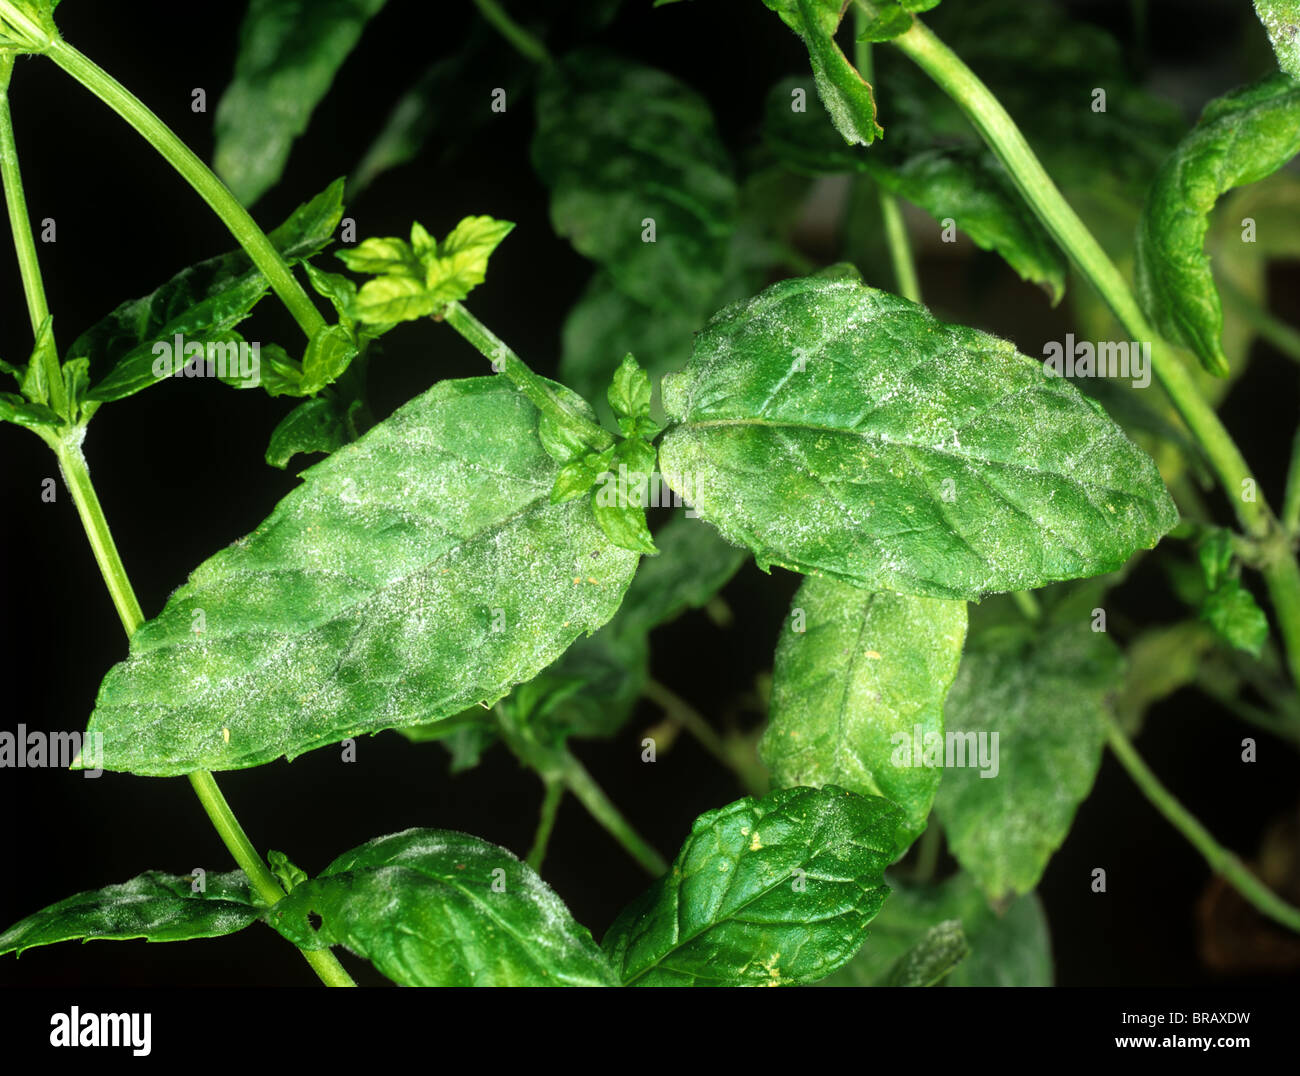 Powdery mildew (Erysiphe orontii) infection on mint leaves Stock Photo